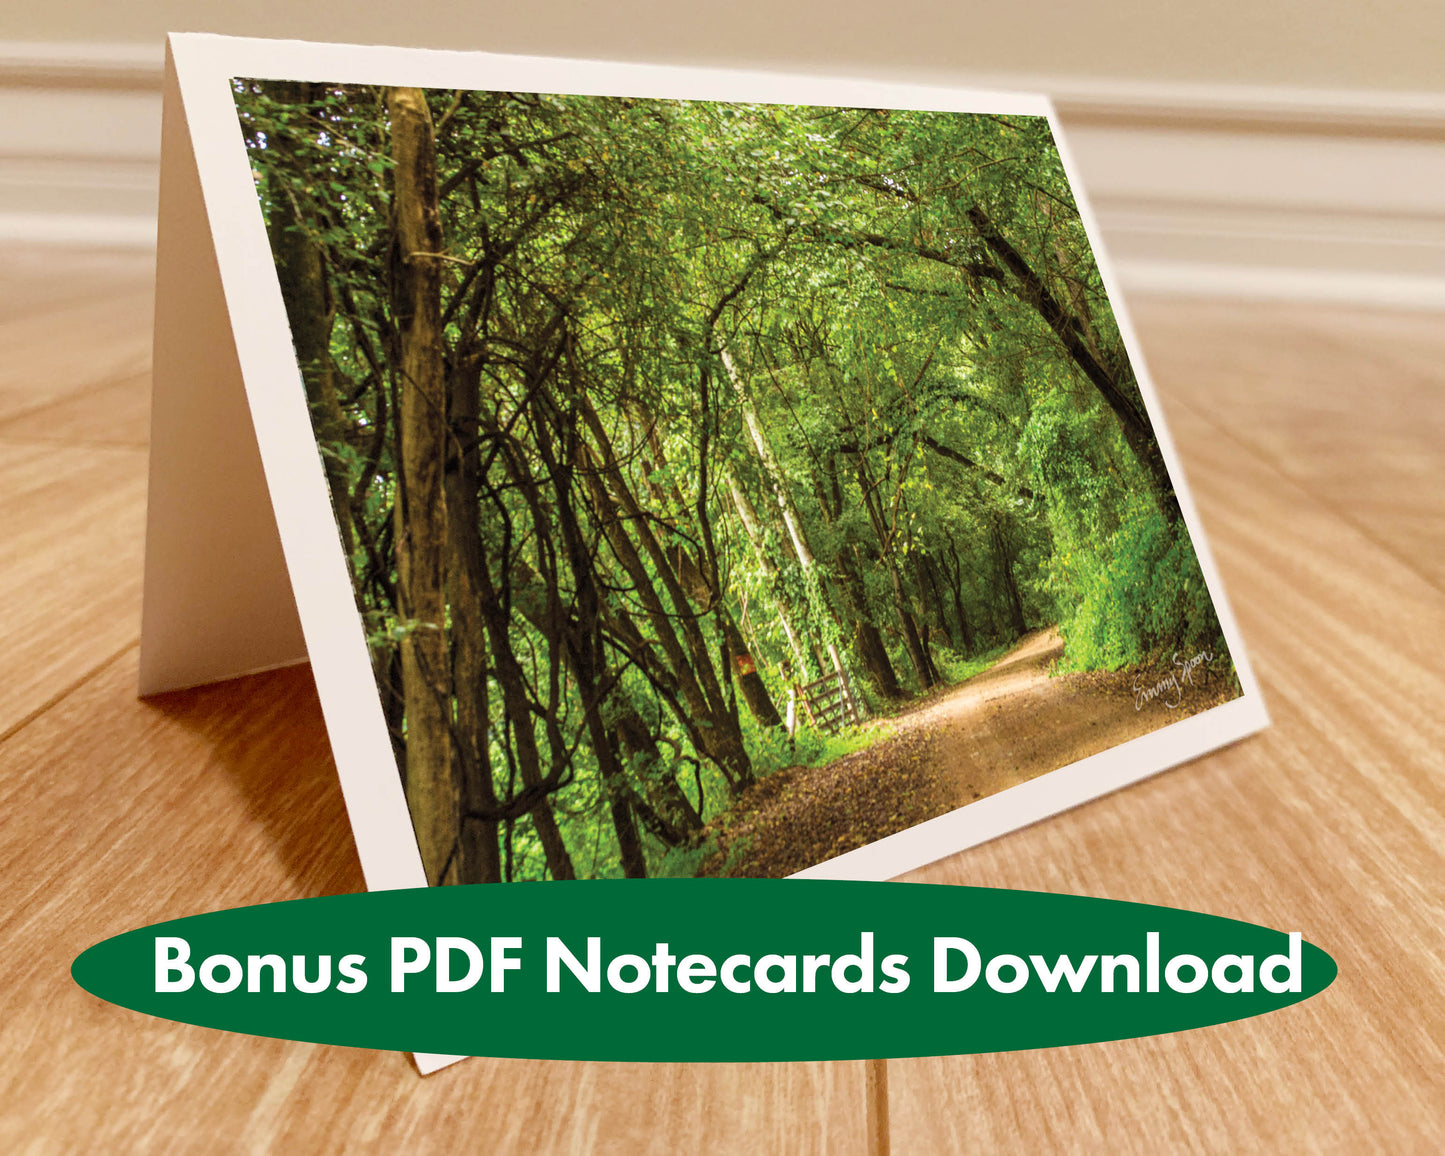 Bonus PDF Notecards Download